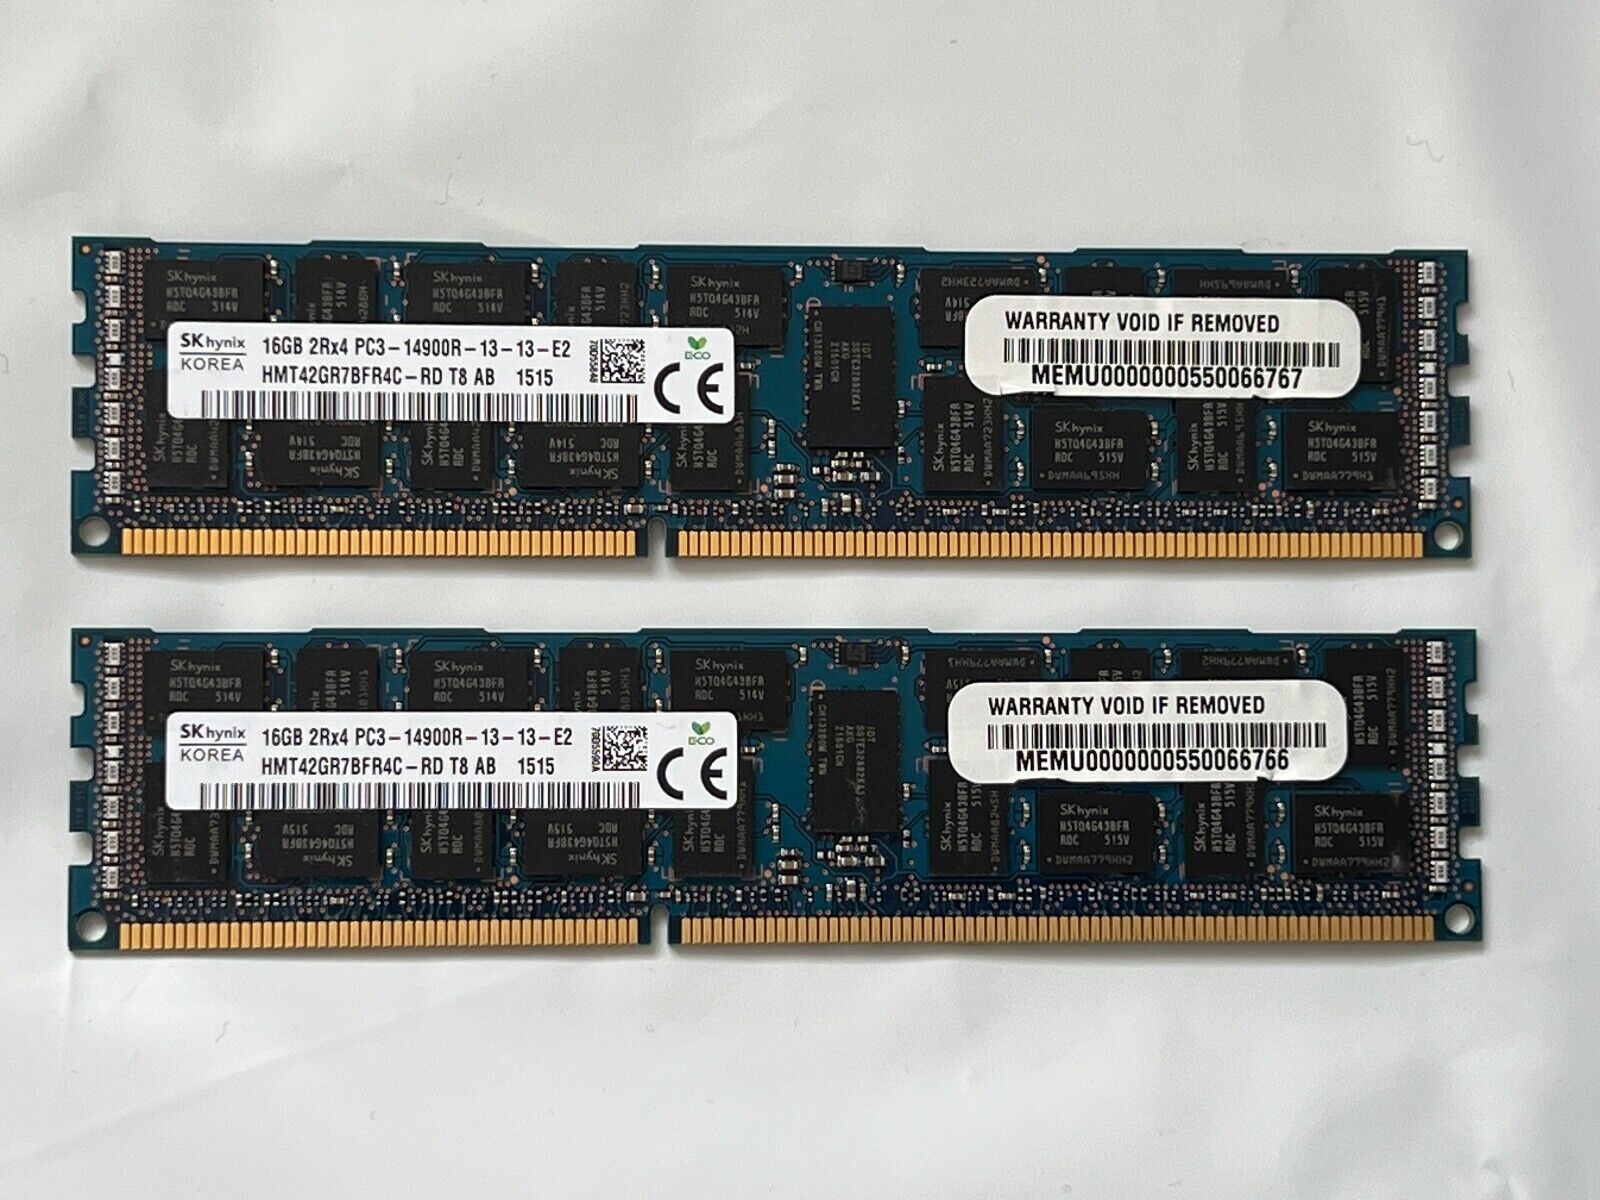 SK Hynix 32GB (2 x 16GB) PC3-14900R DDR3 1866MHz ECC Registered Server RAM